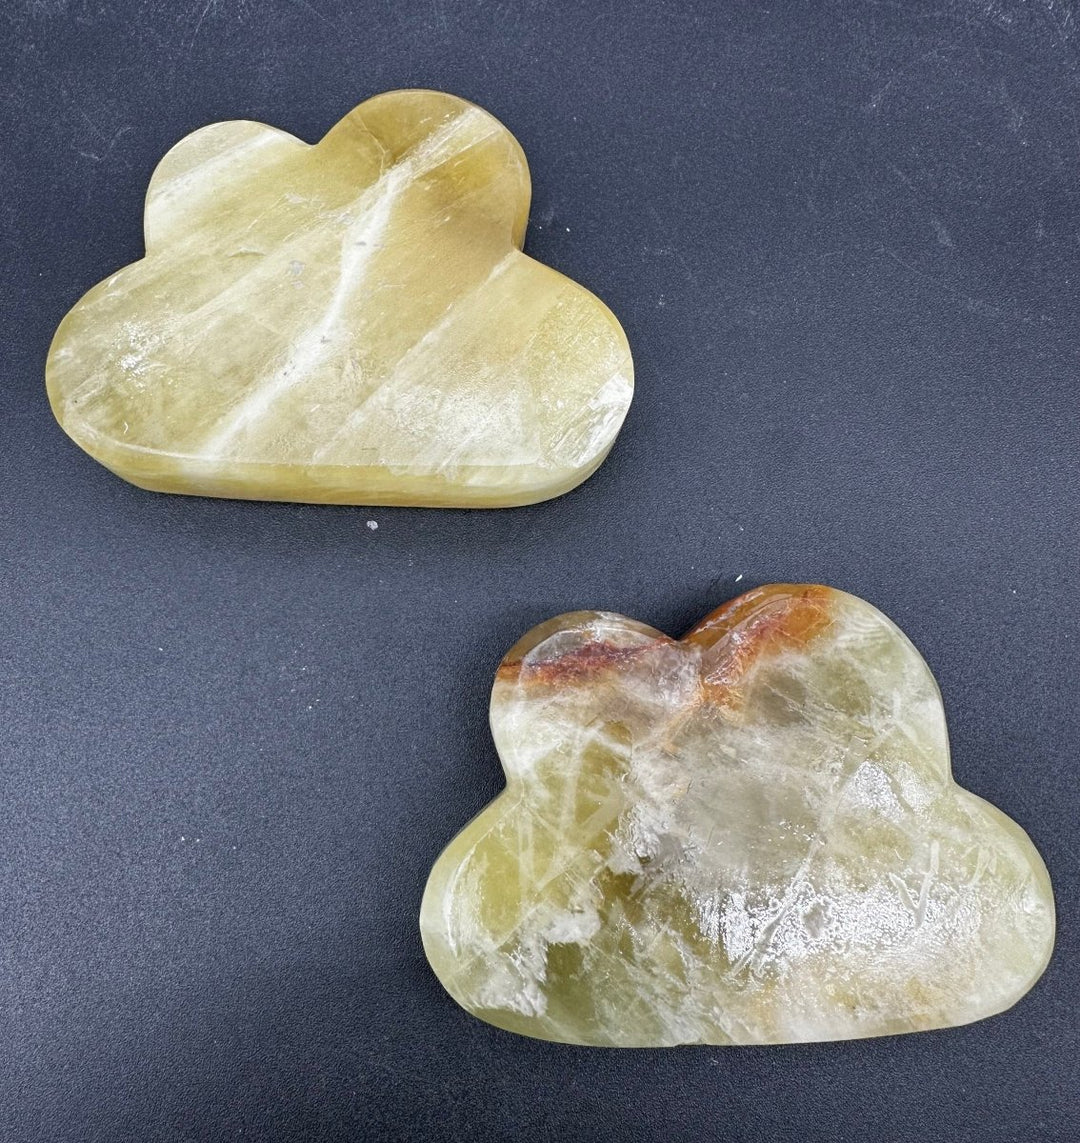 Lemon Calcite Cloud Gemstones (1 Kilogram) Size 1.5 to 3.5 Inches Bulk Wholesale Lot Crystal Shapes